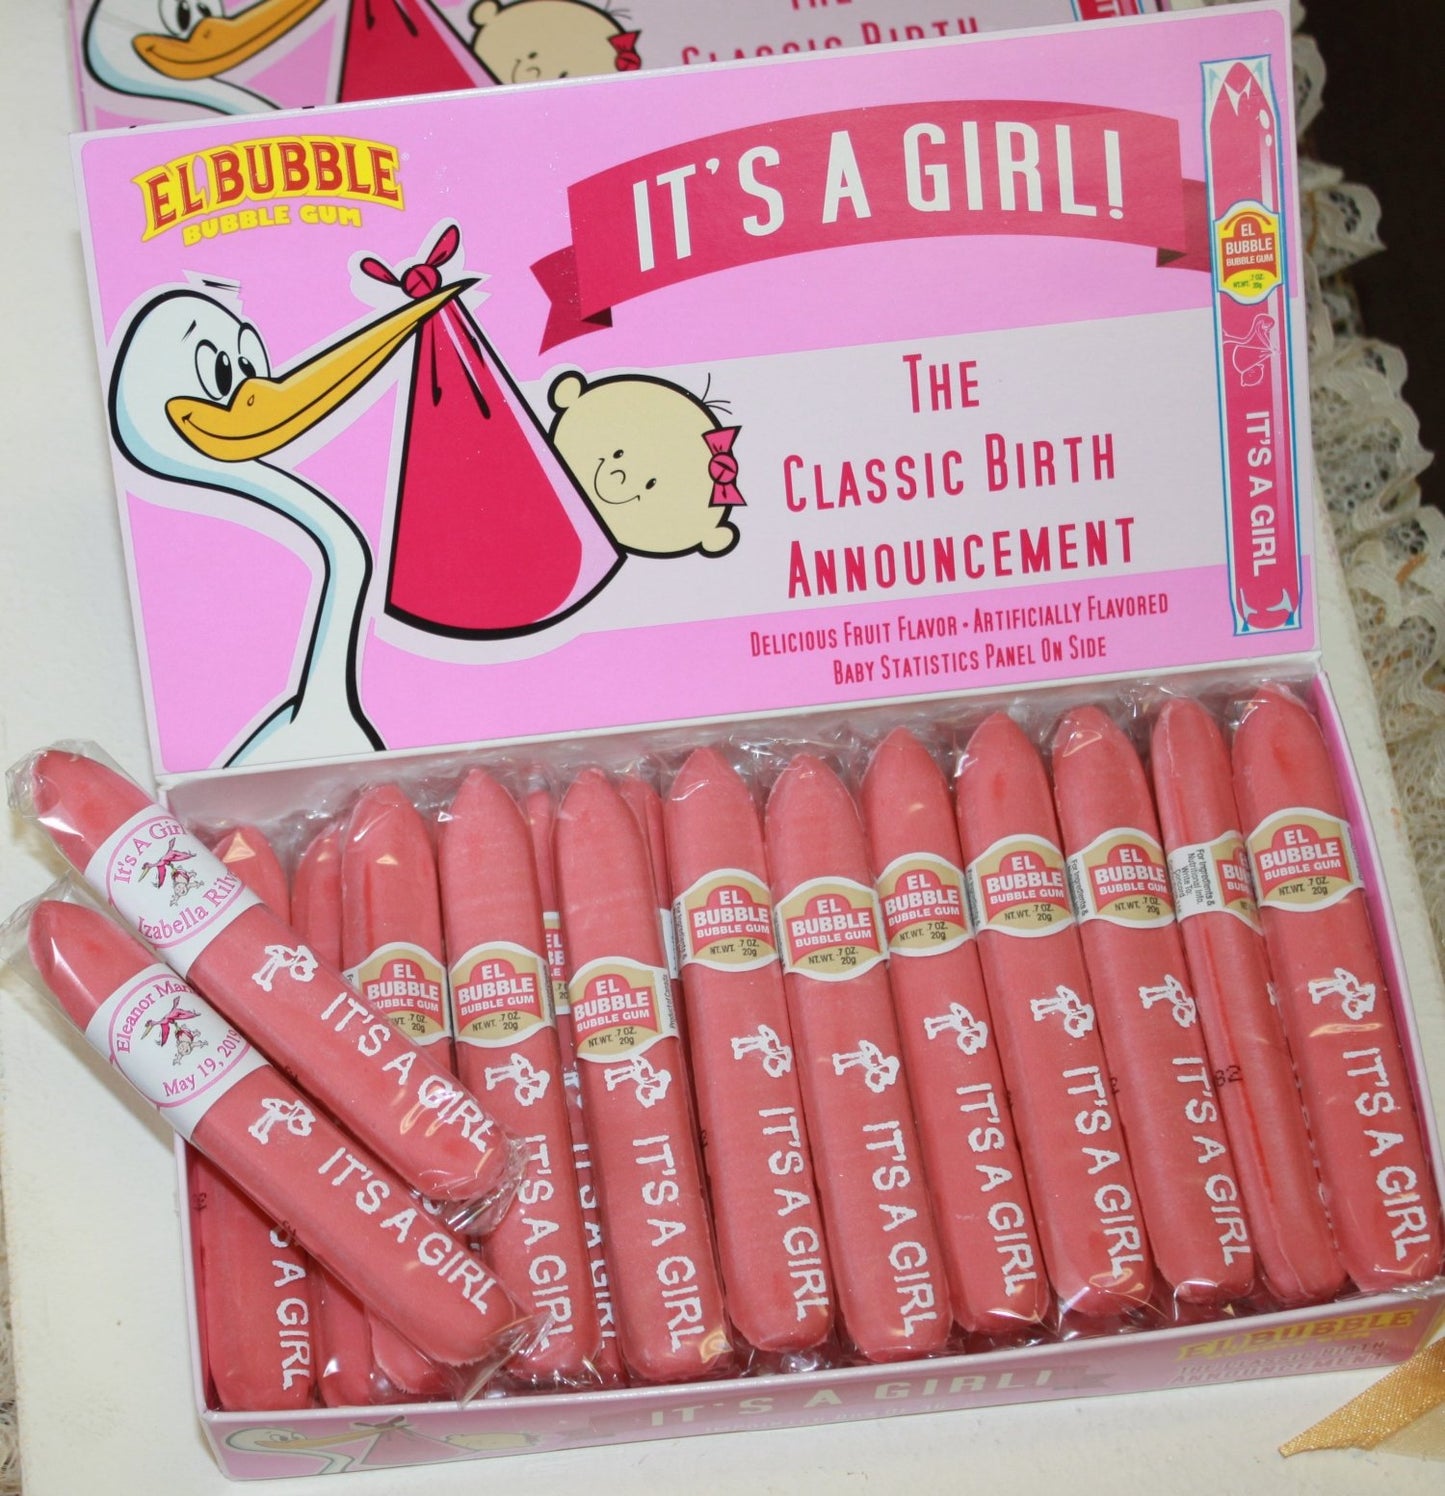 El Bubble Bubble Gum It's a Girl Cigars - 36ct